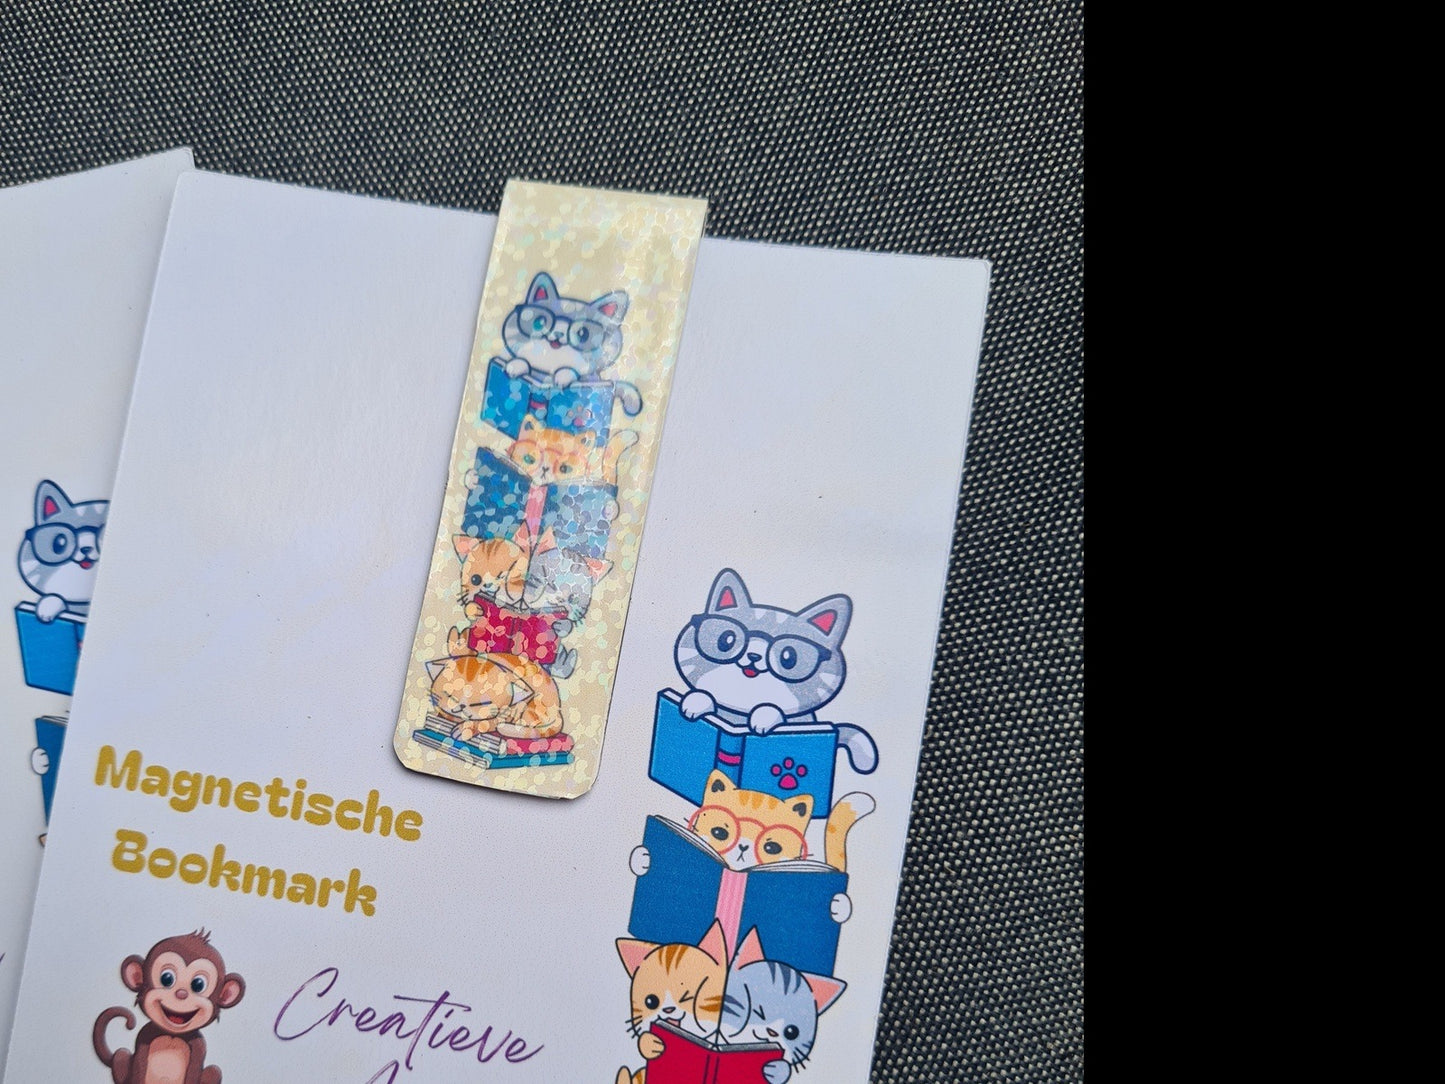 Magnetische Bookmark - Kitties Reading Tower: holografisch - Super Kawaii